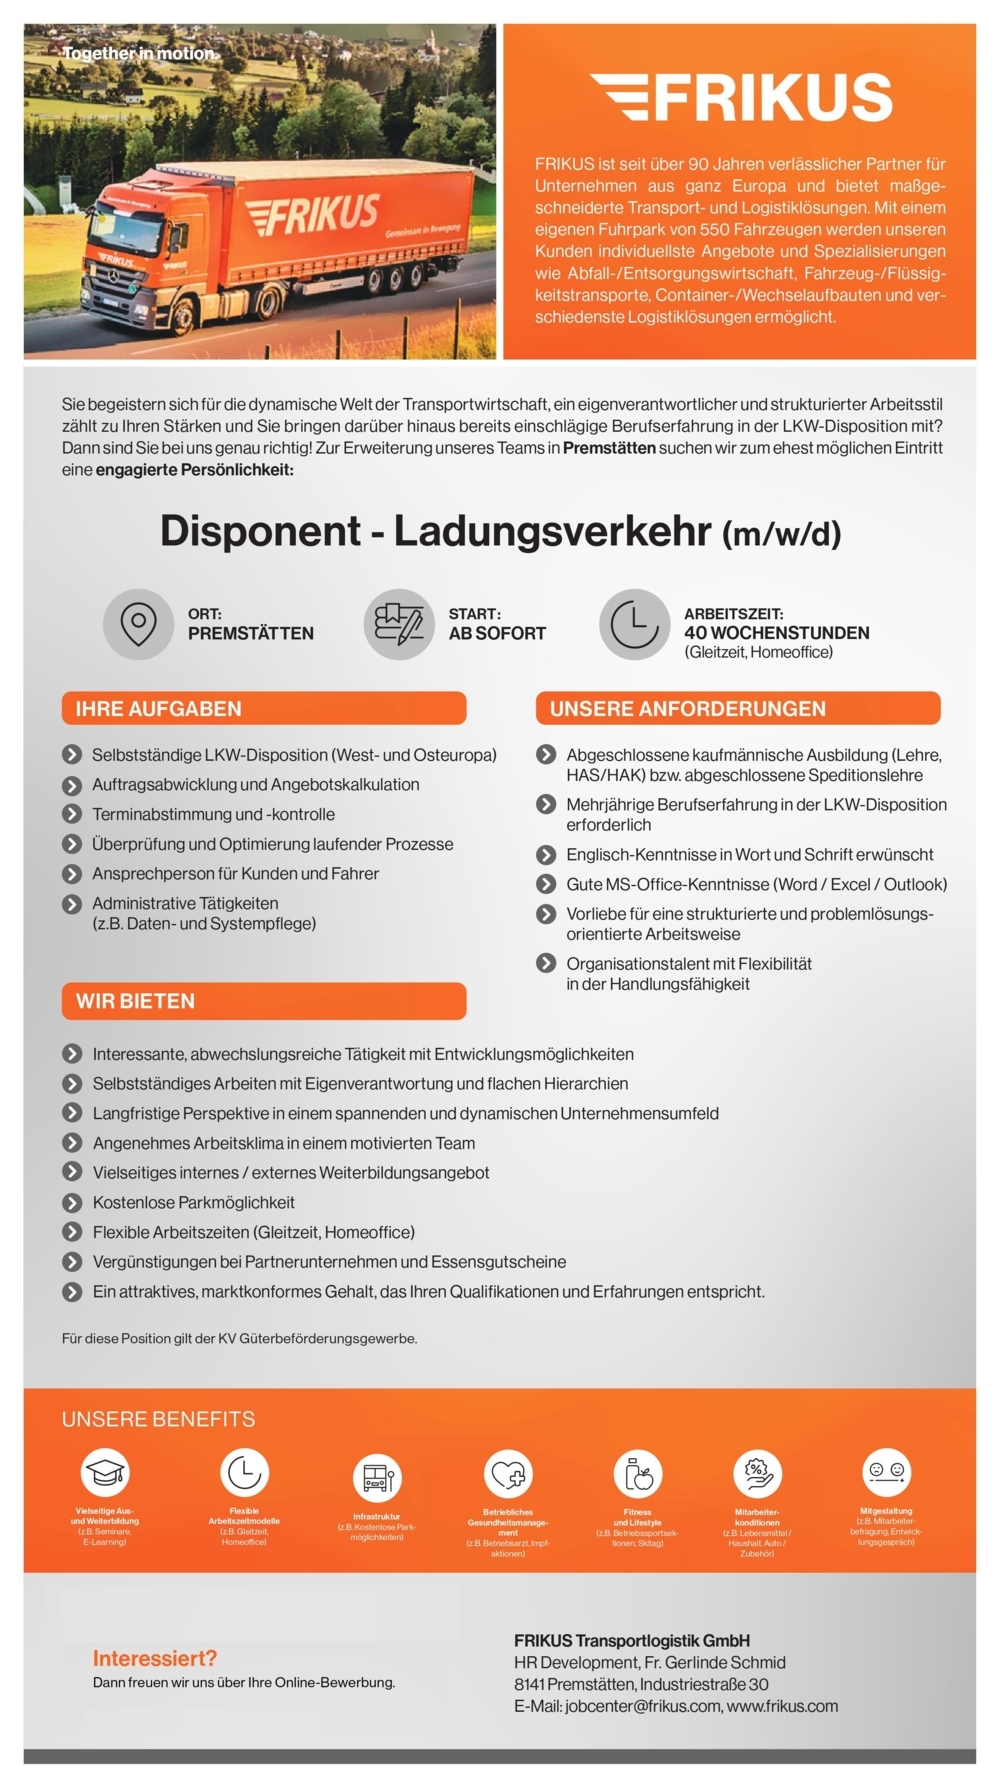 Disponent - Ladungsverkehr (m/w/d)